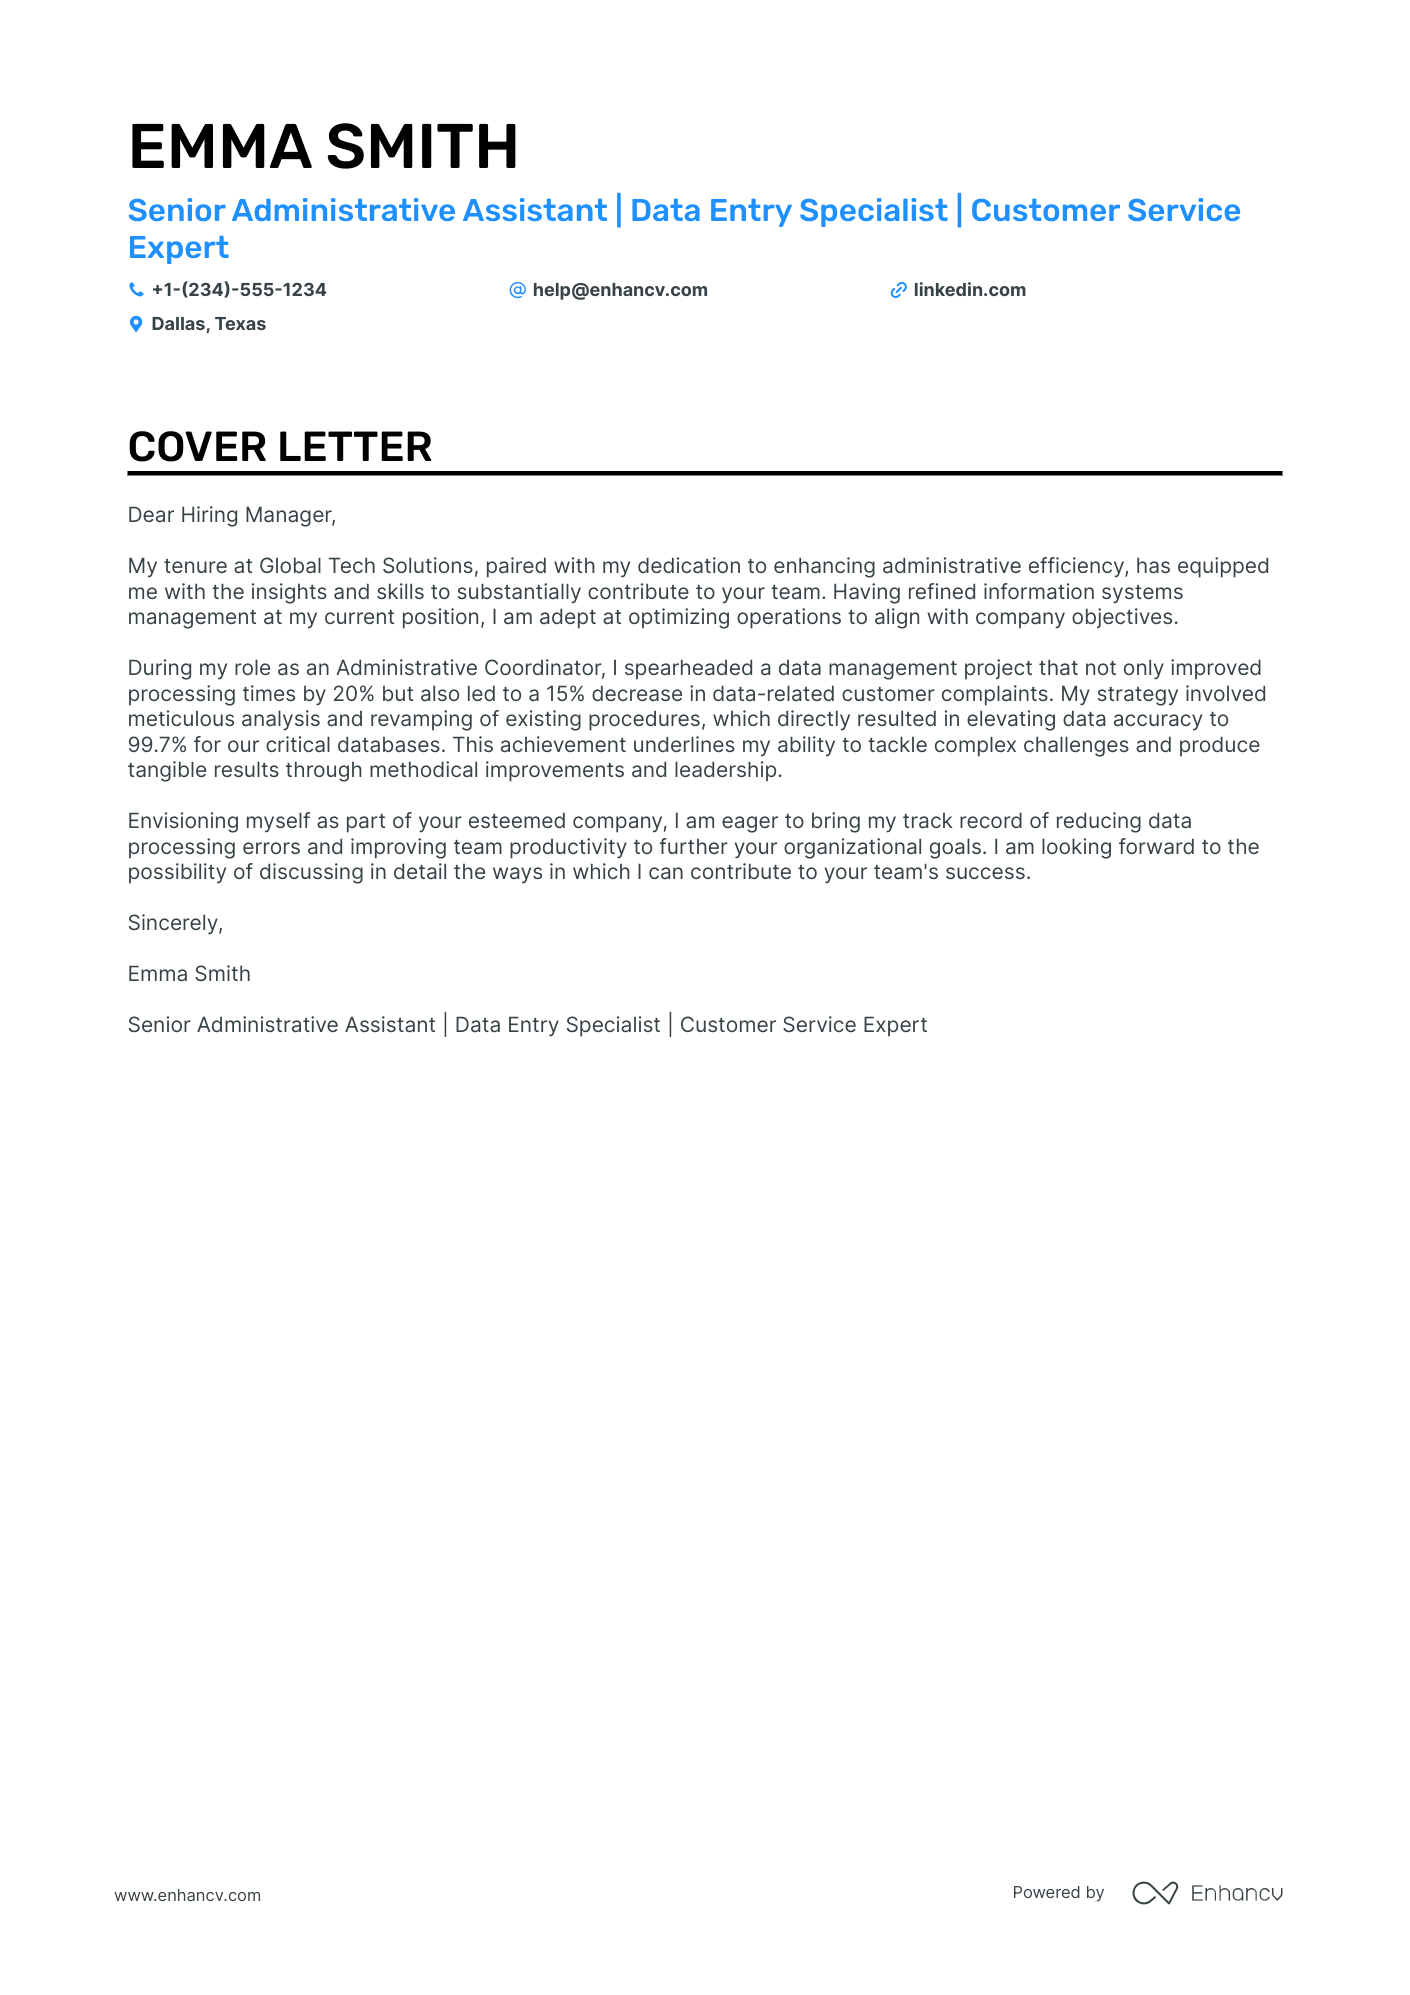 cover letter for a data entry job sample